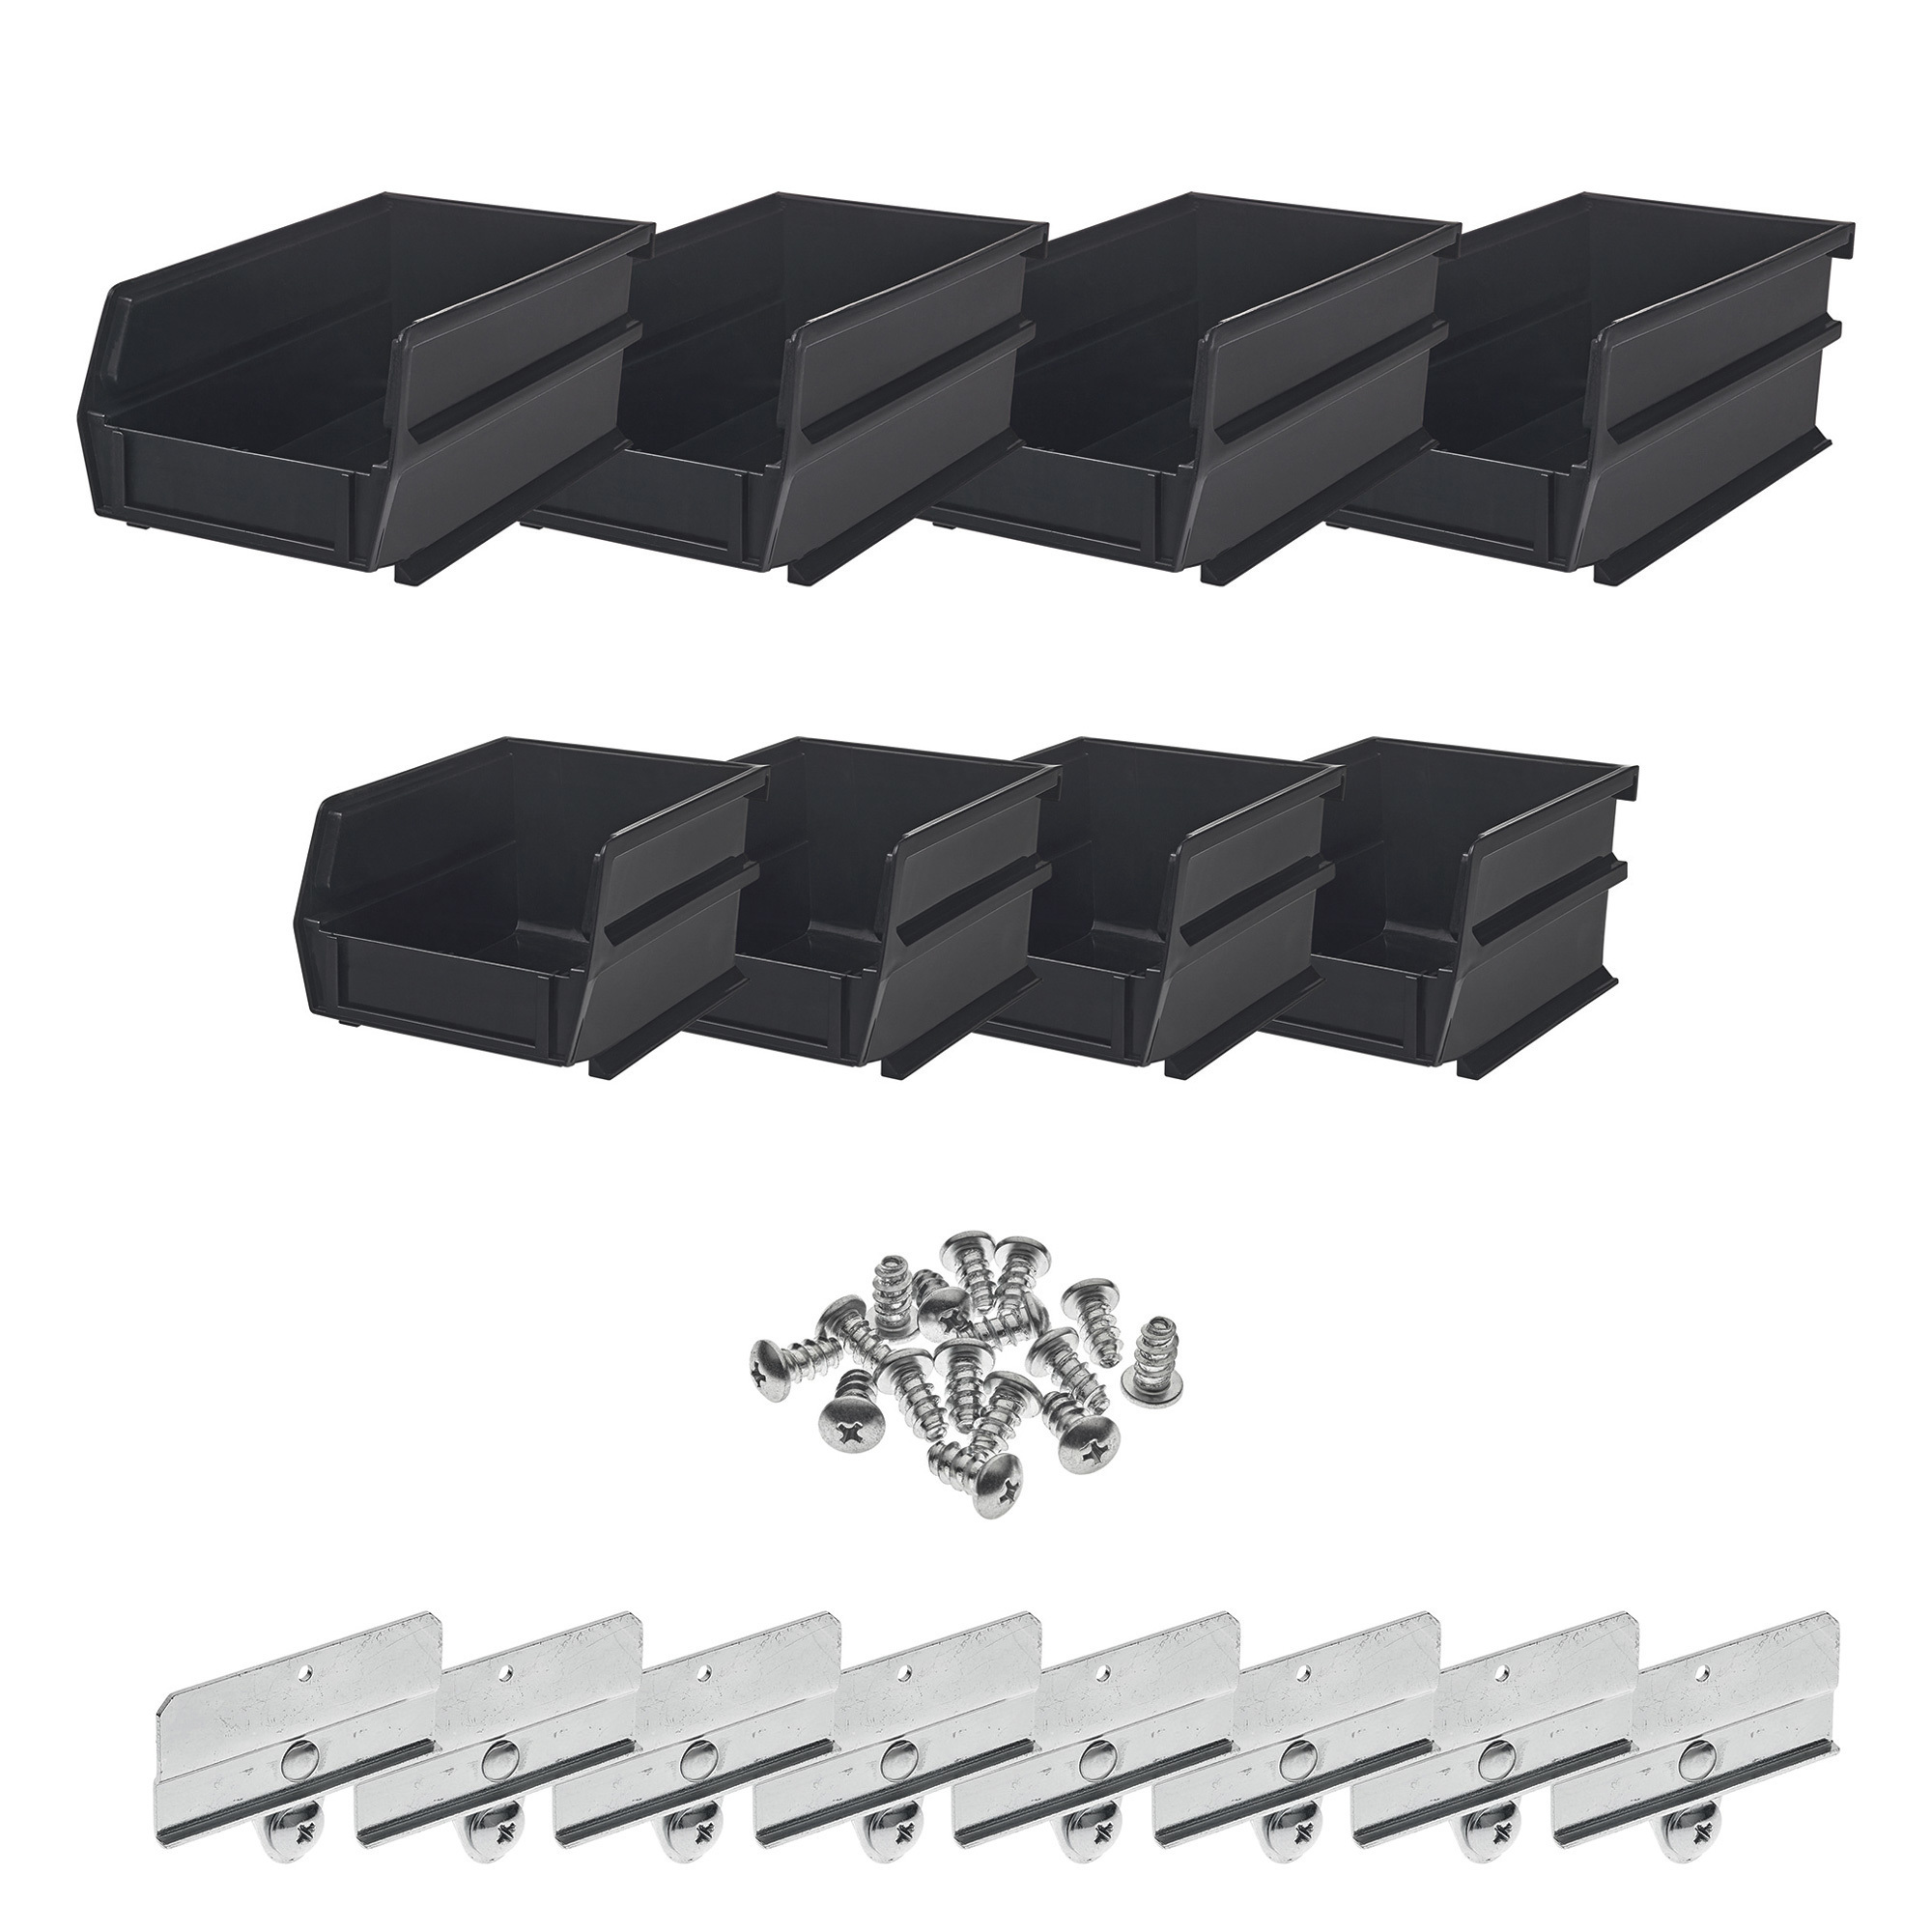 Triton Products DuraHook Small/Medium BinKit, 8-Pack Set, Black, Model 028-BK